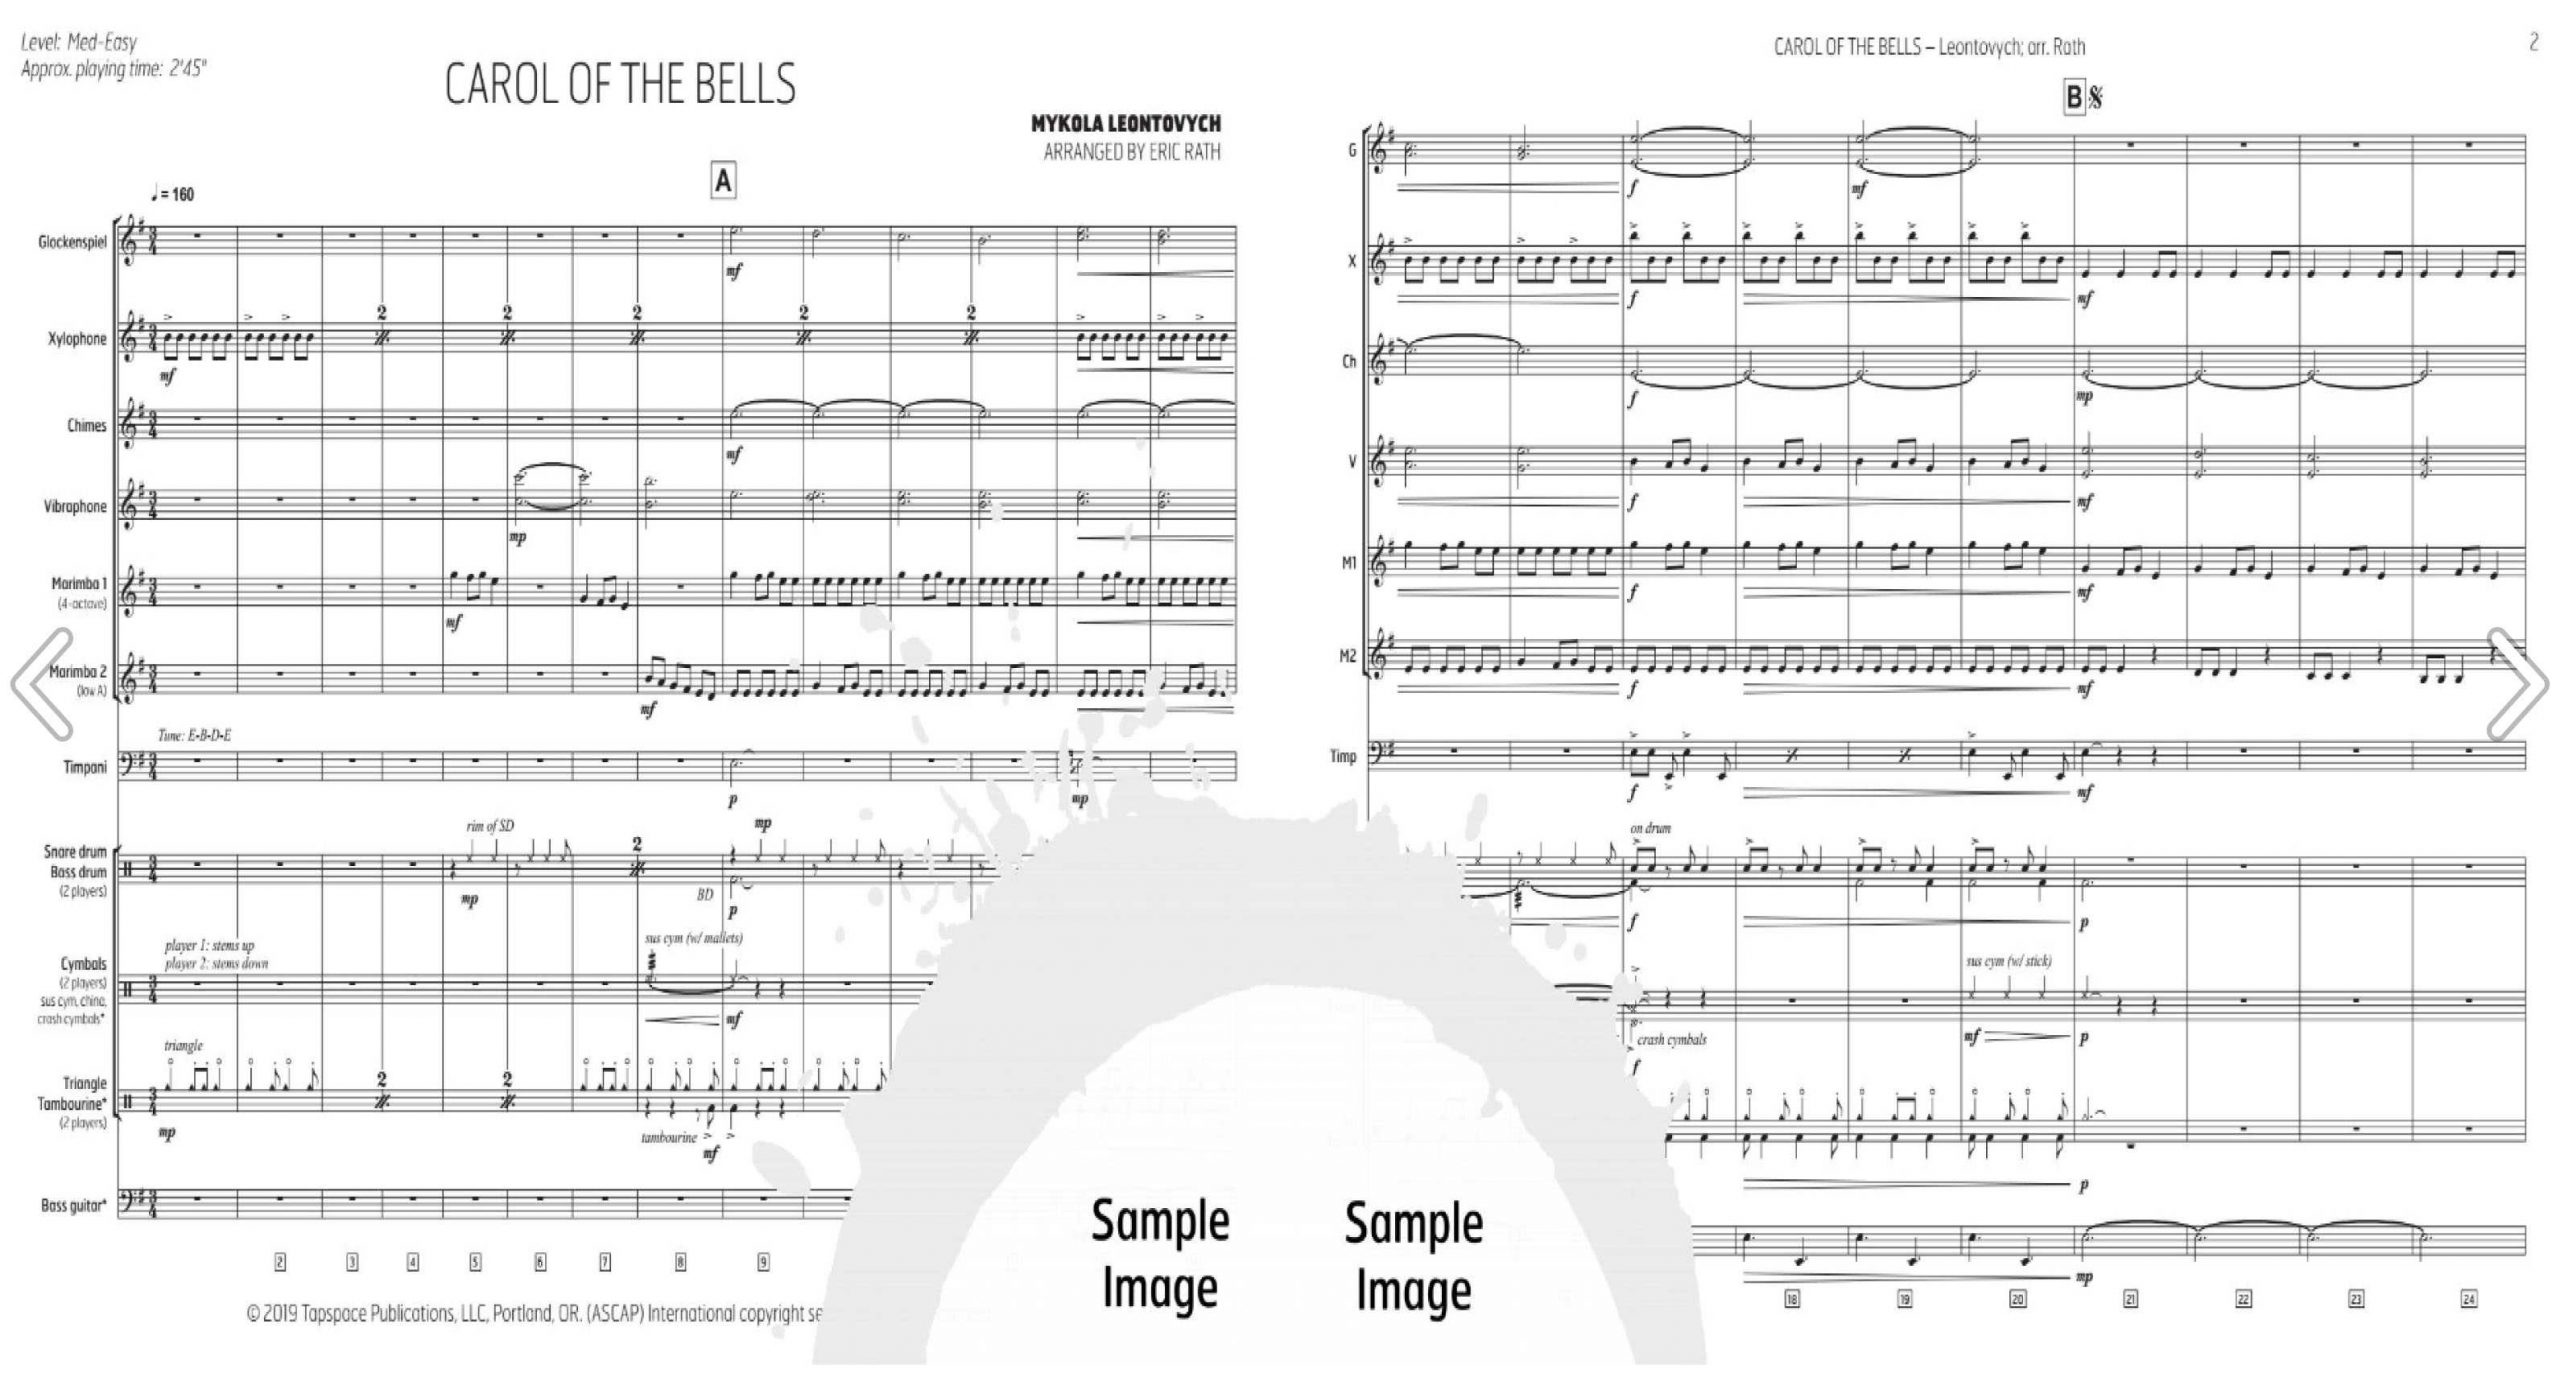 Carol Of the Bells by Leontovychm arr. Eric Rath